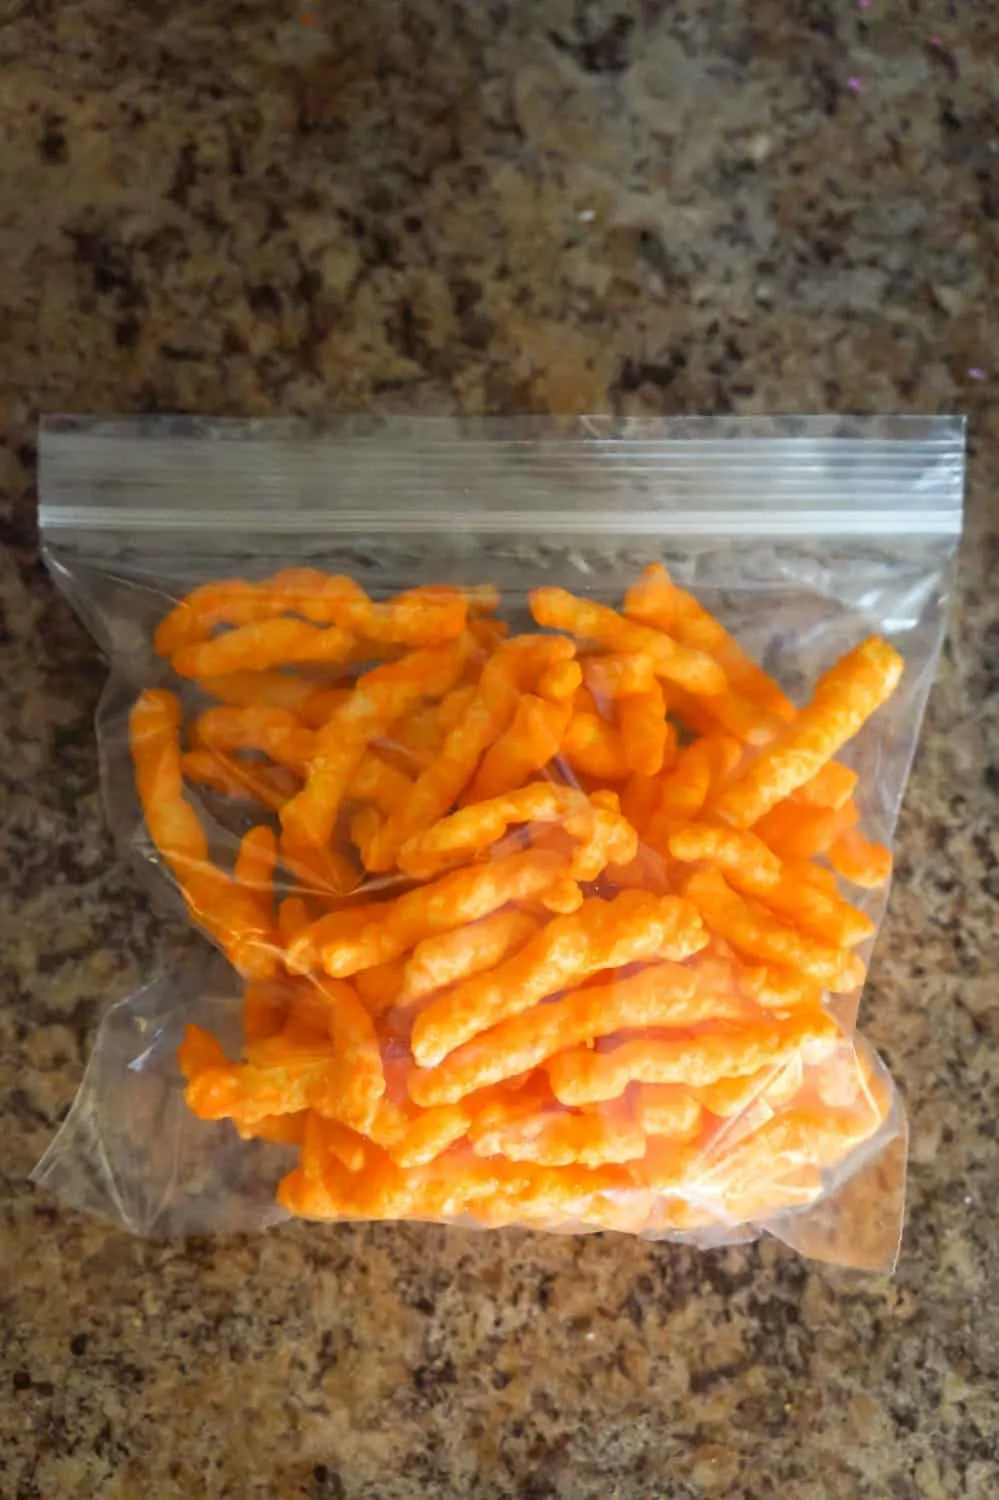 cheetos in a Ziploc bag